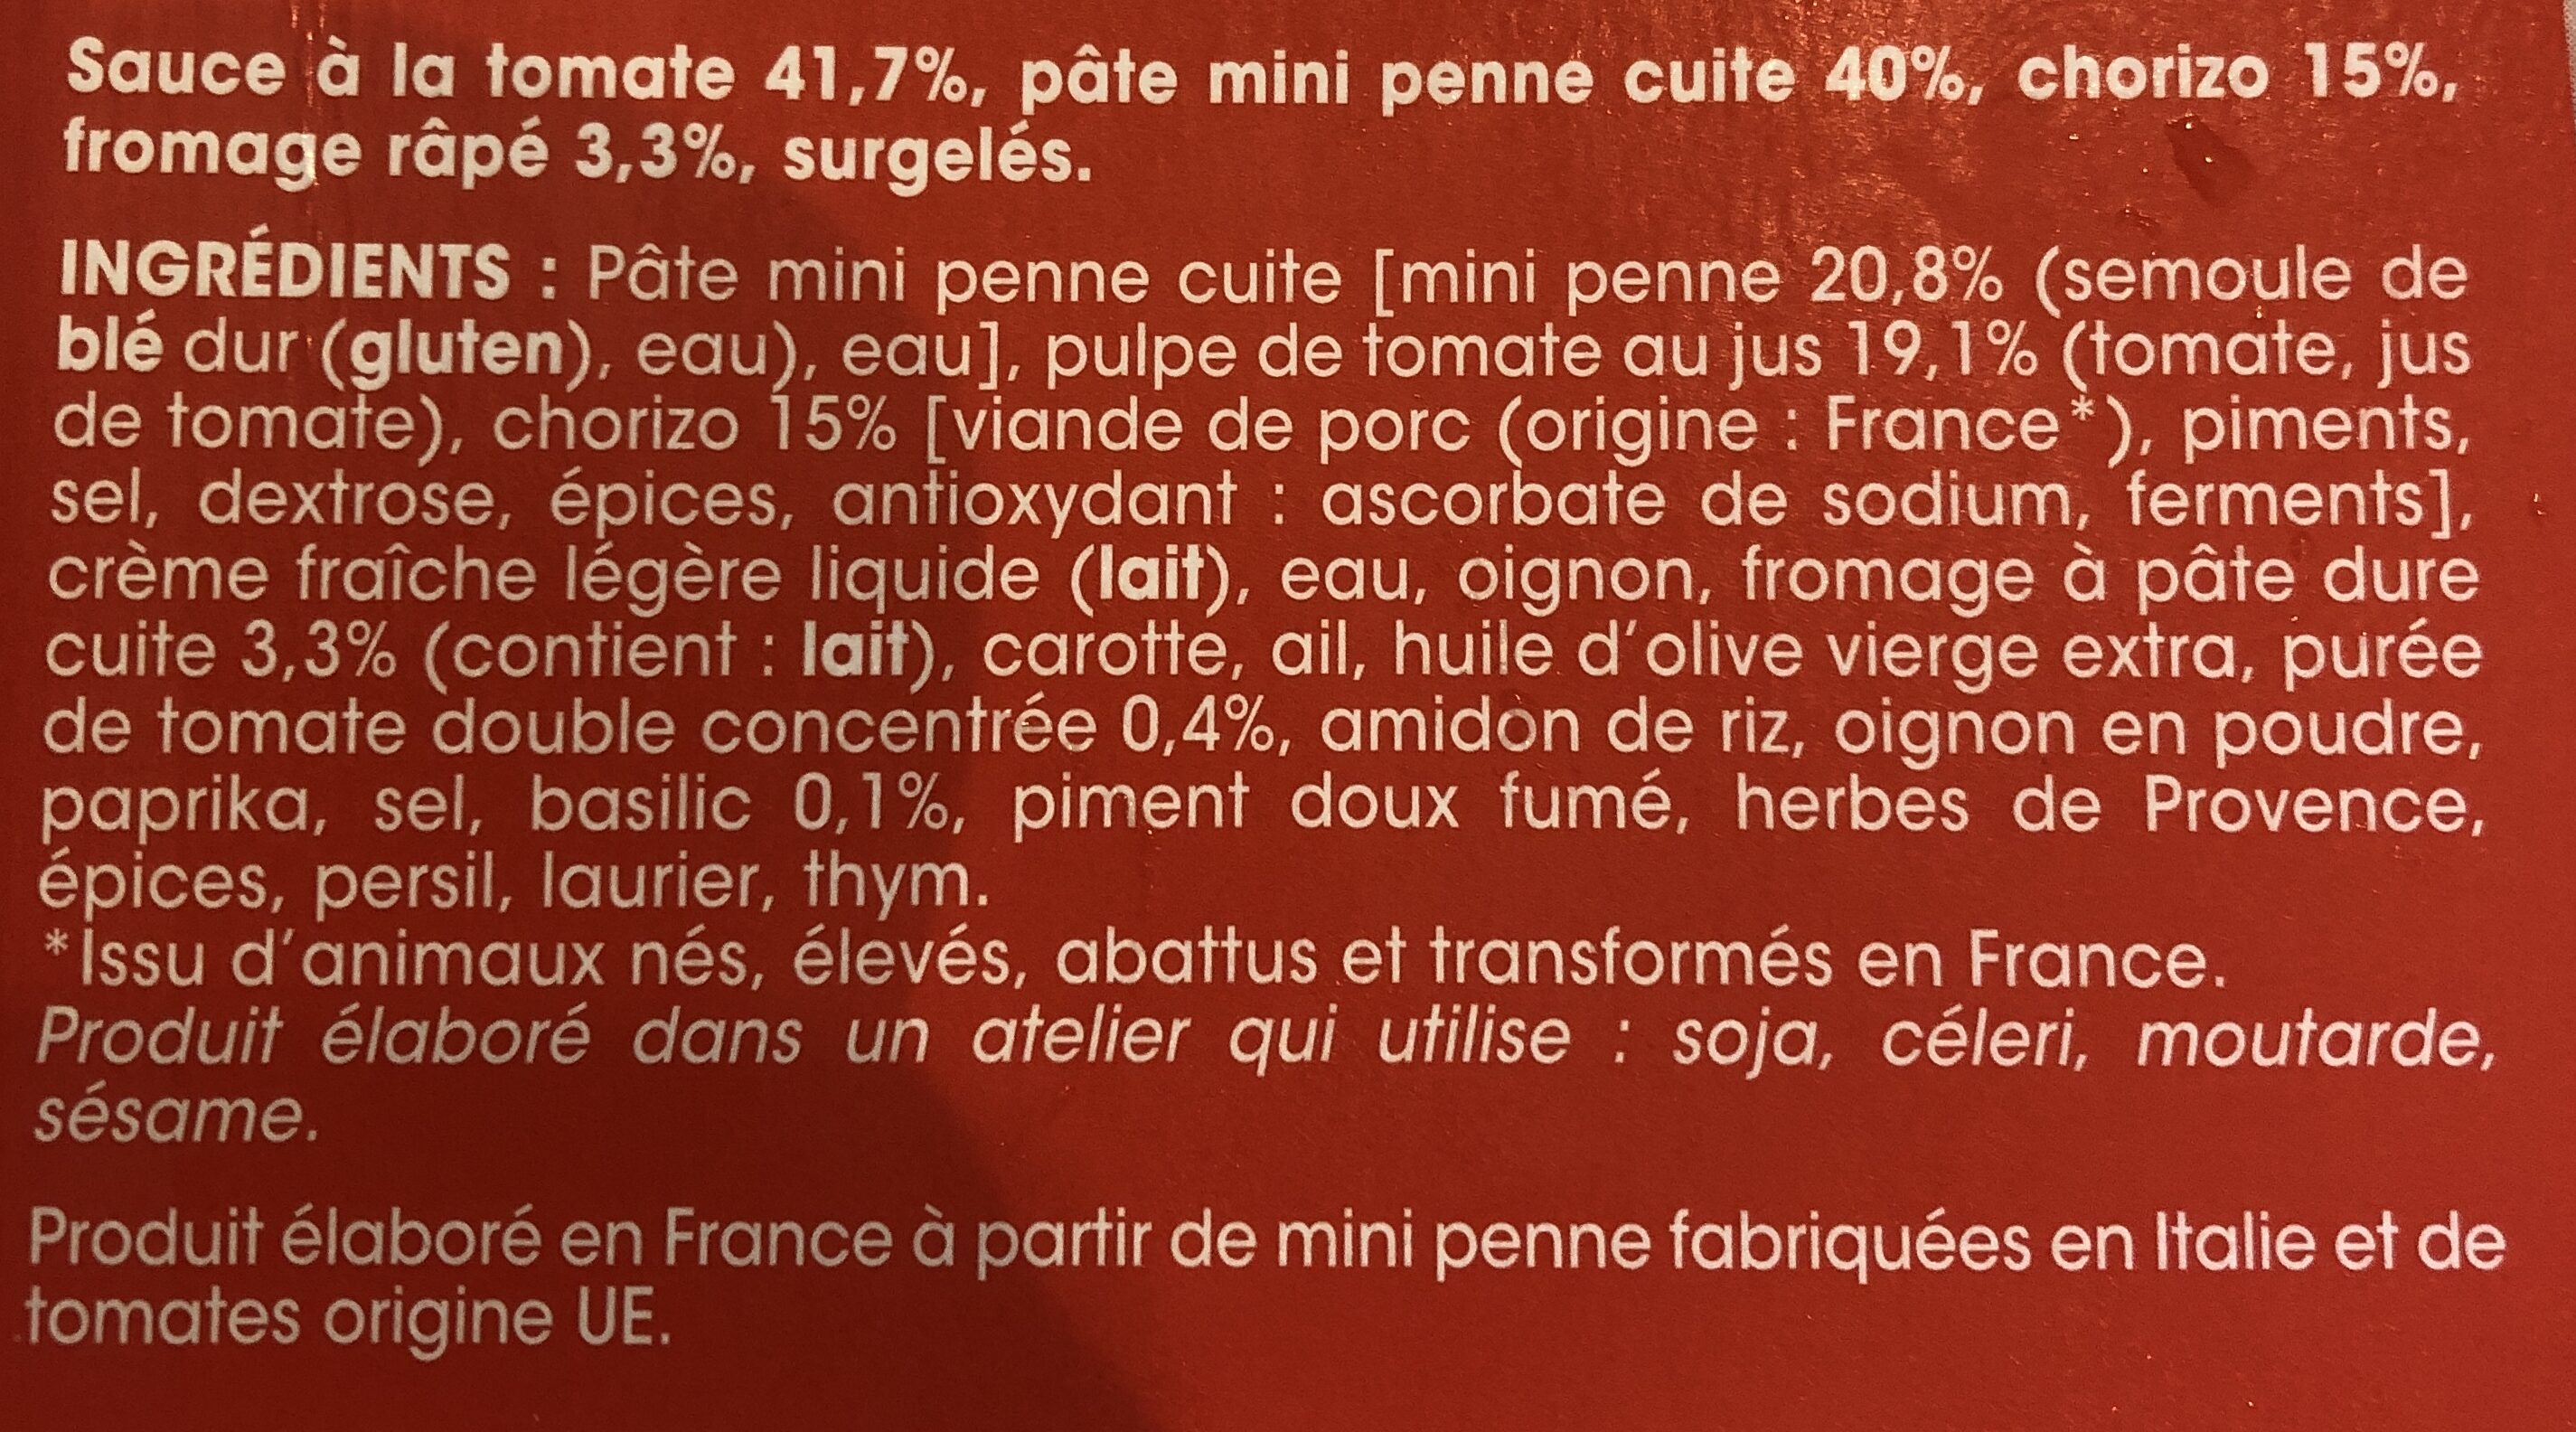 Mini penne au chorizo, sauce à la tomate - Ingrediënten - fr